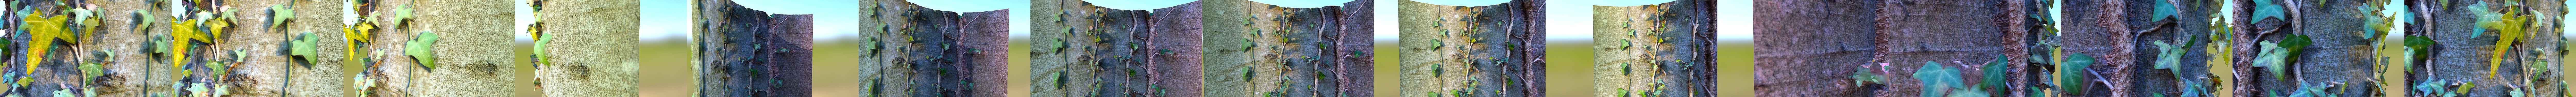 Autumn ivy model